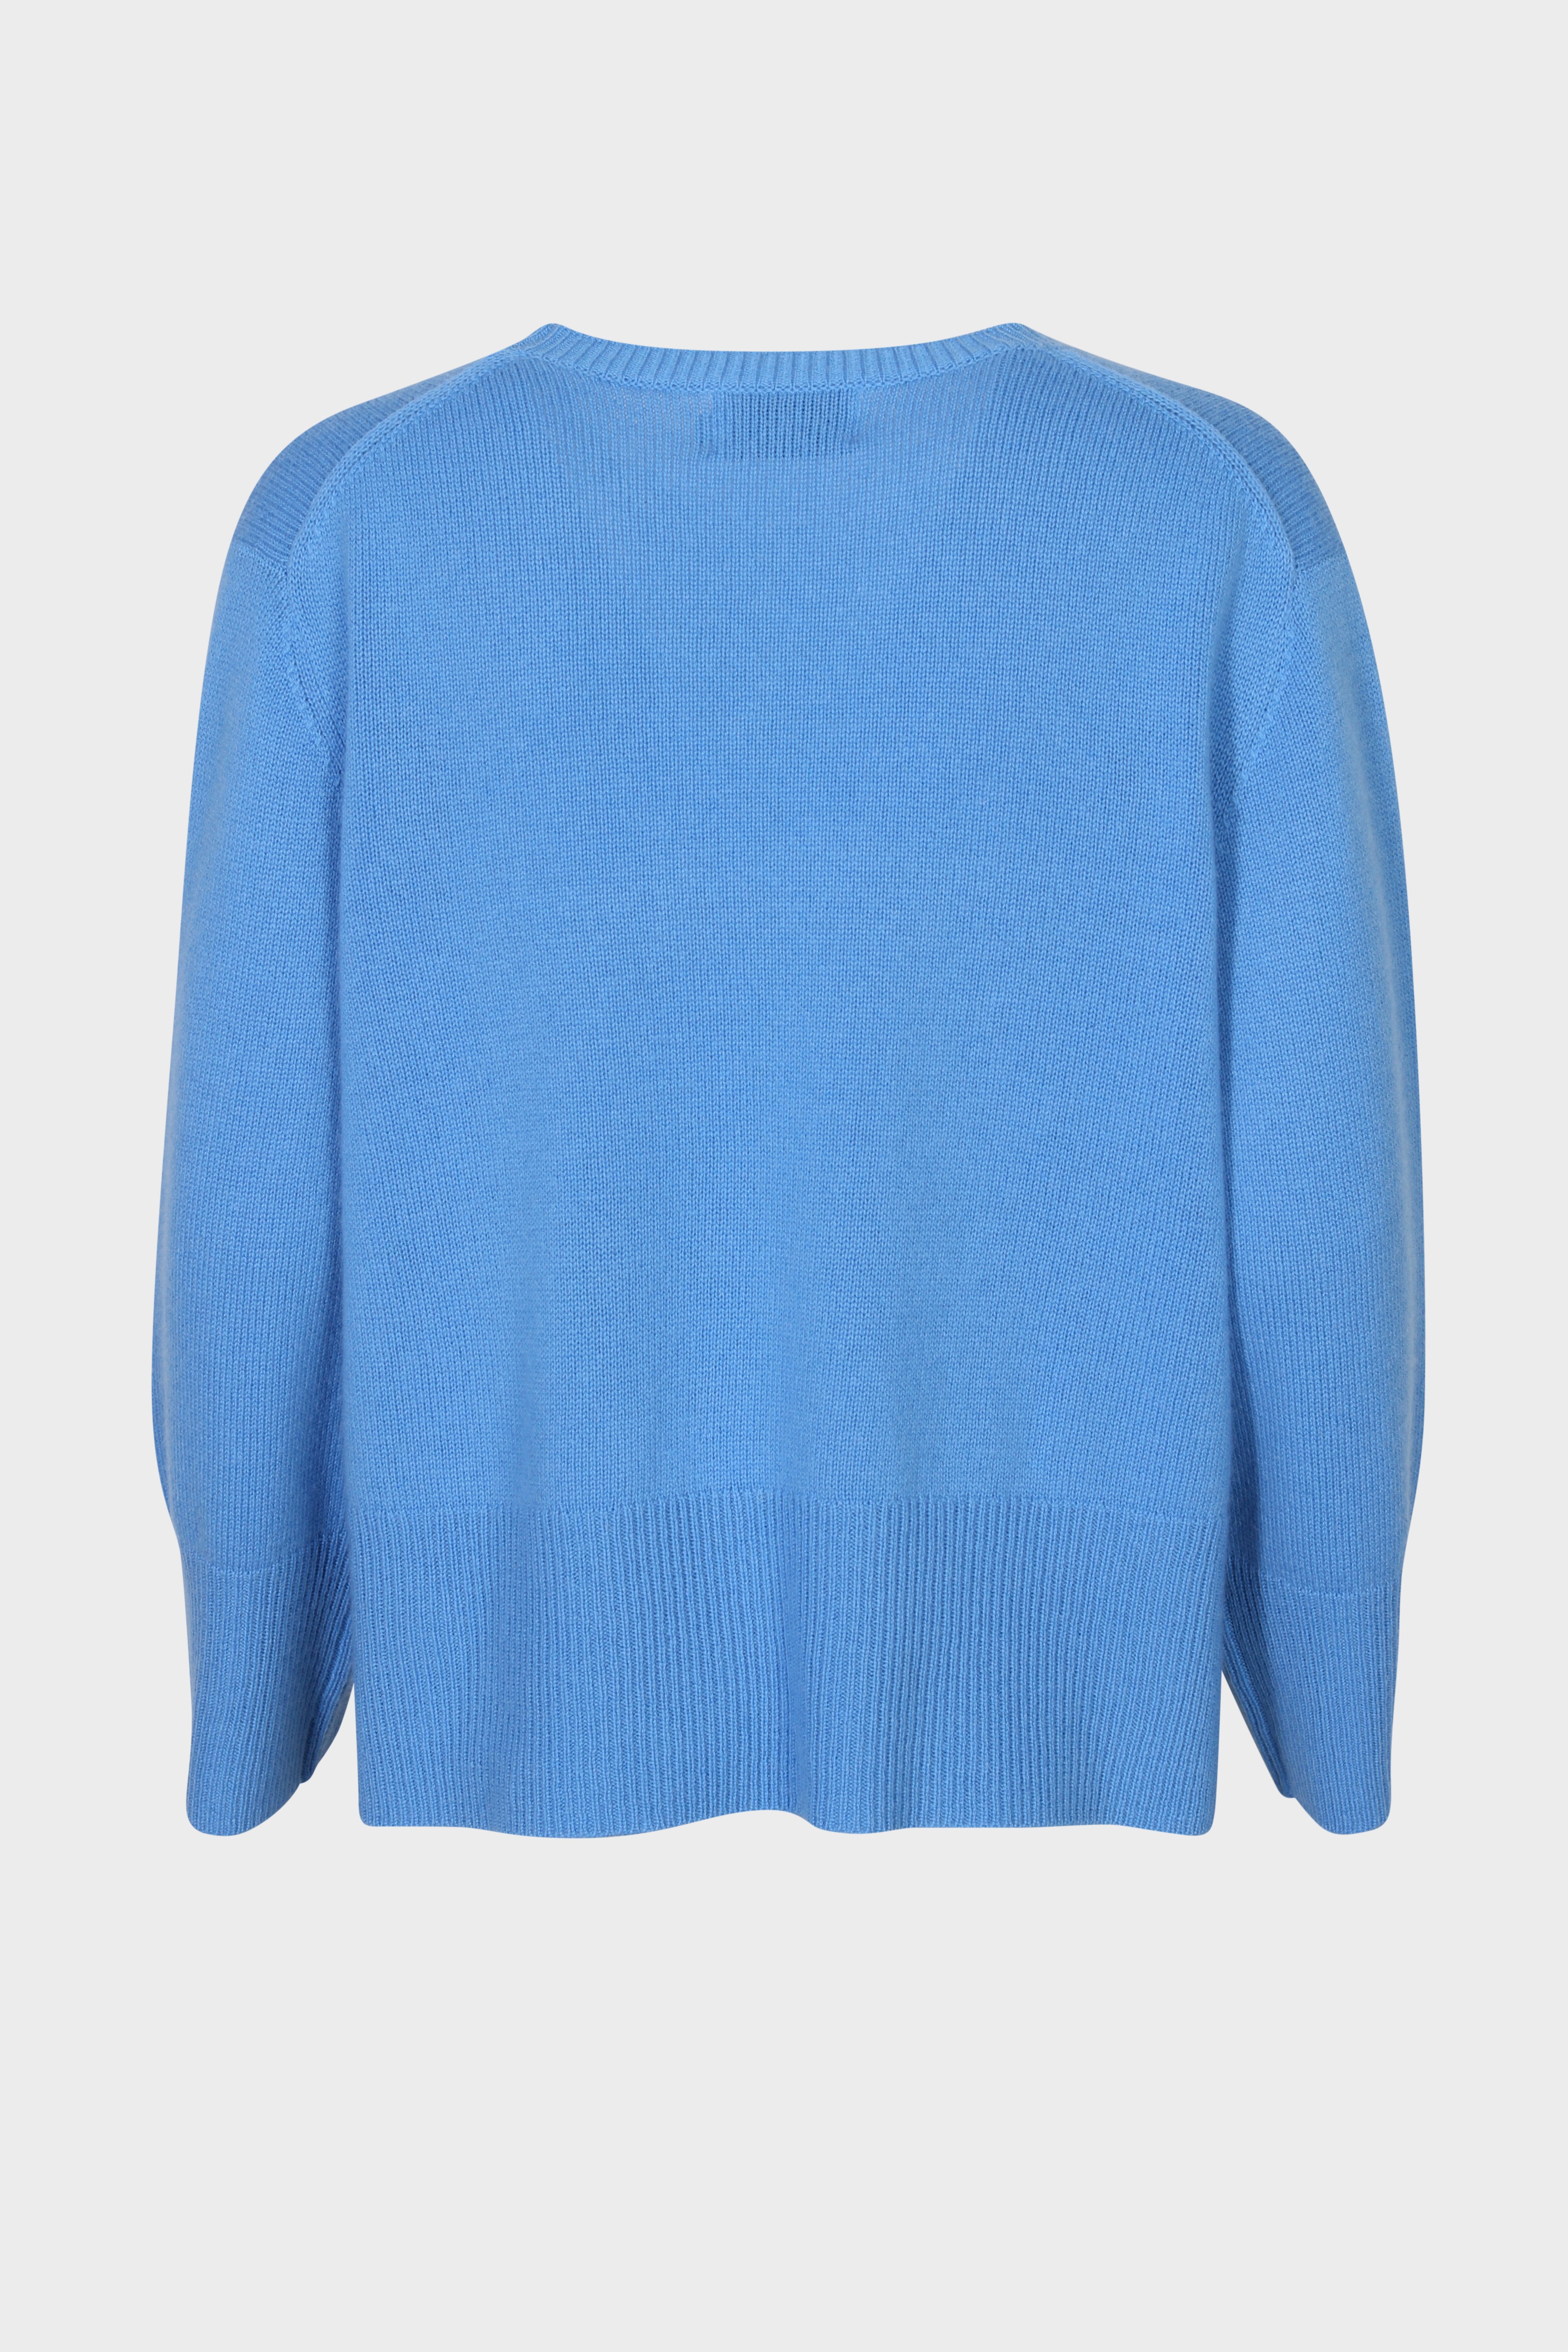 FLONA Cashmere Sweater in Azur XS